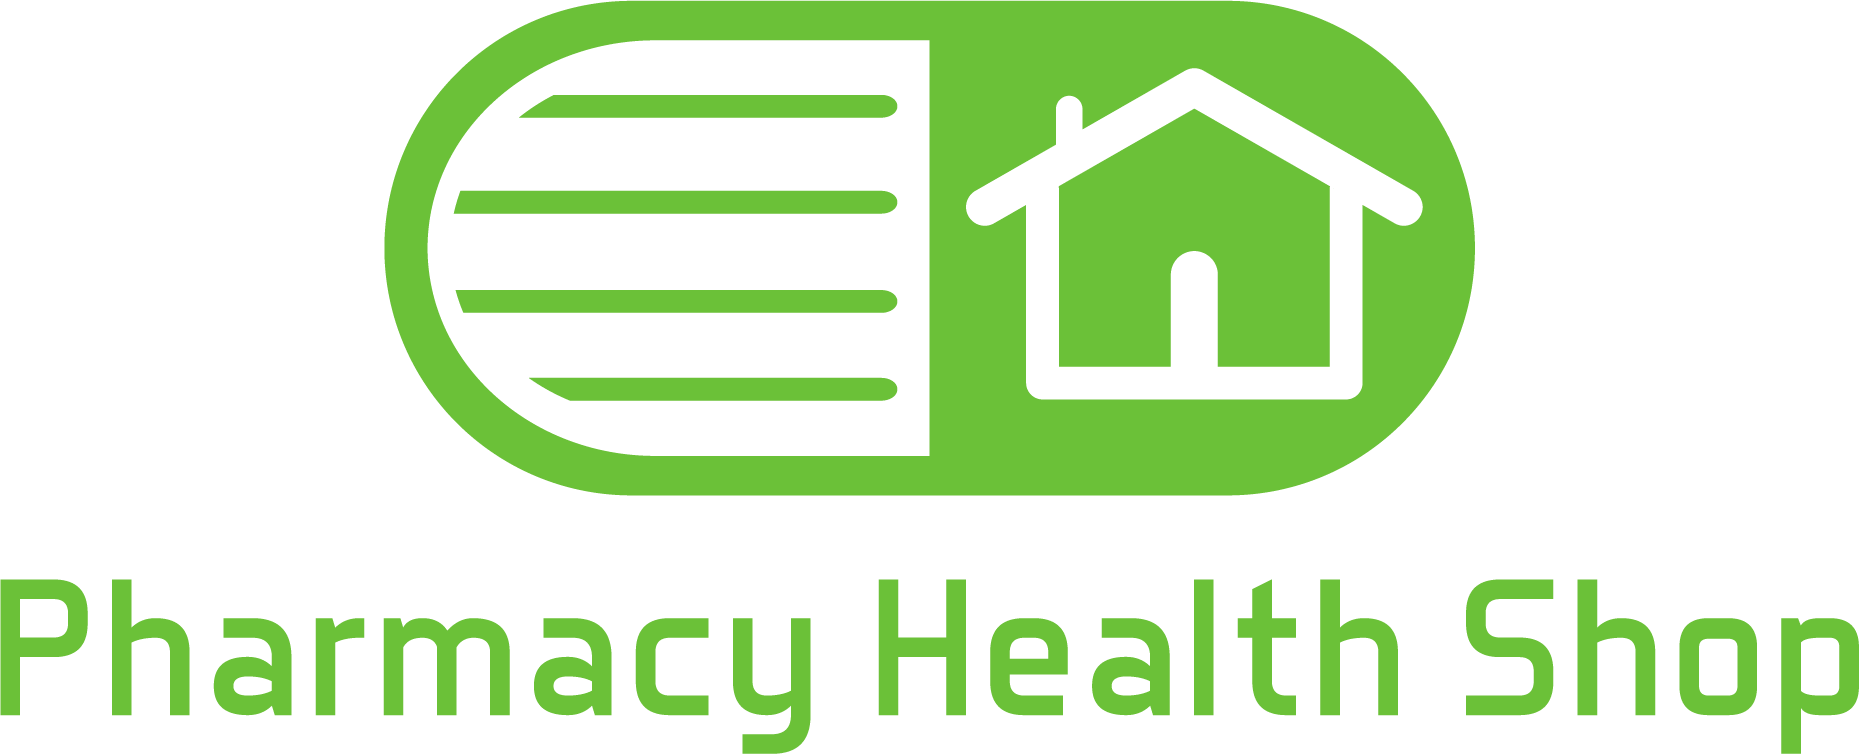 Pharmacy Health Shop - https://pharmacyhealthshop.com